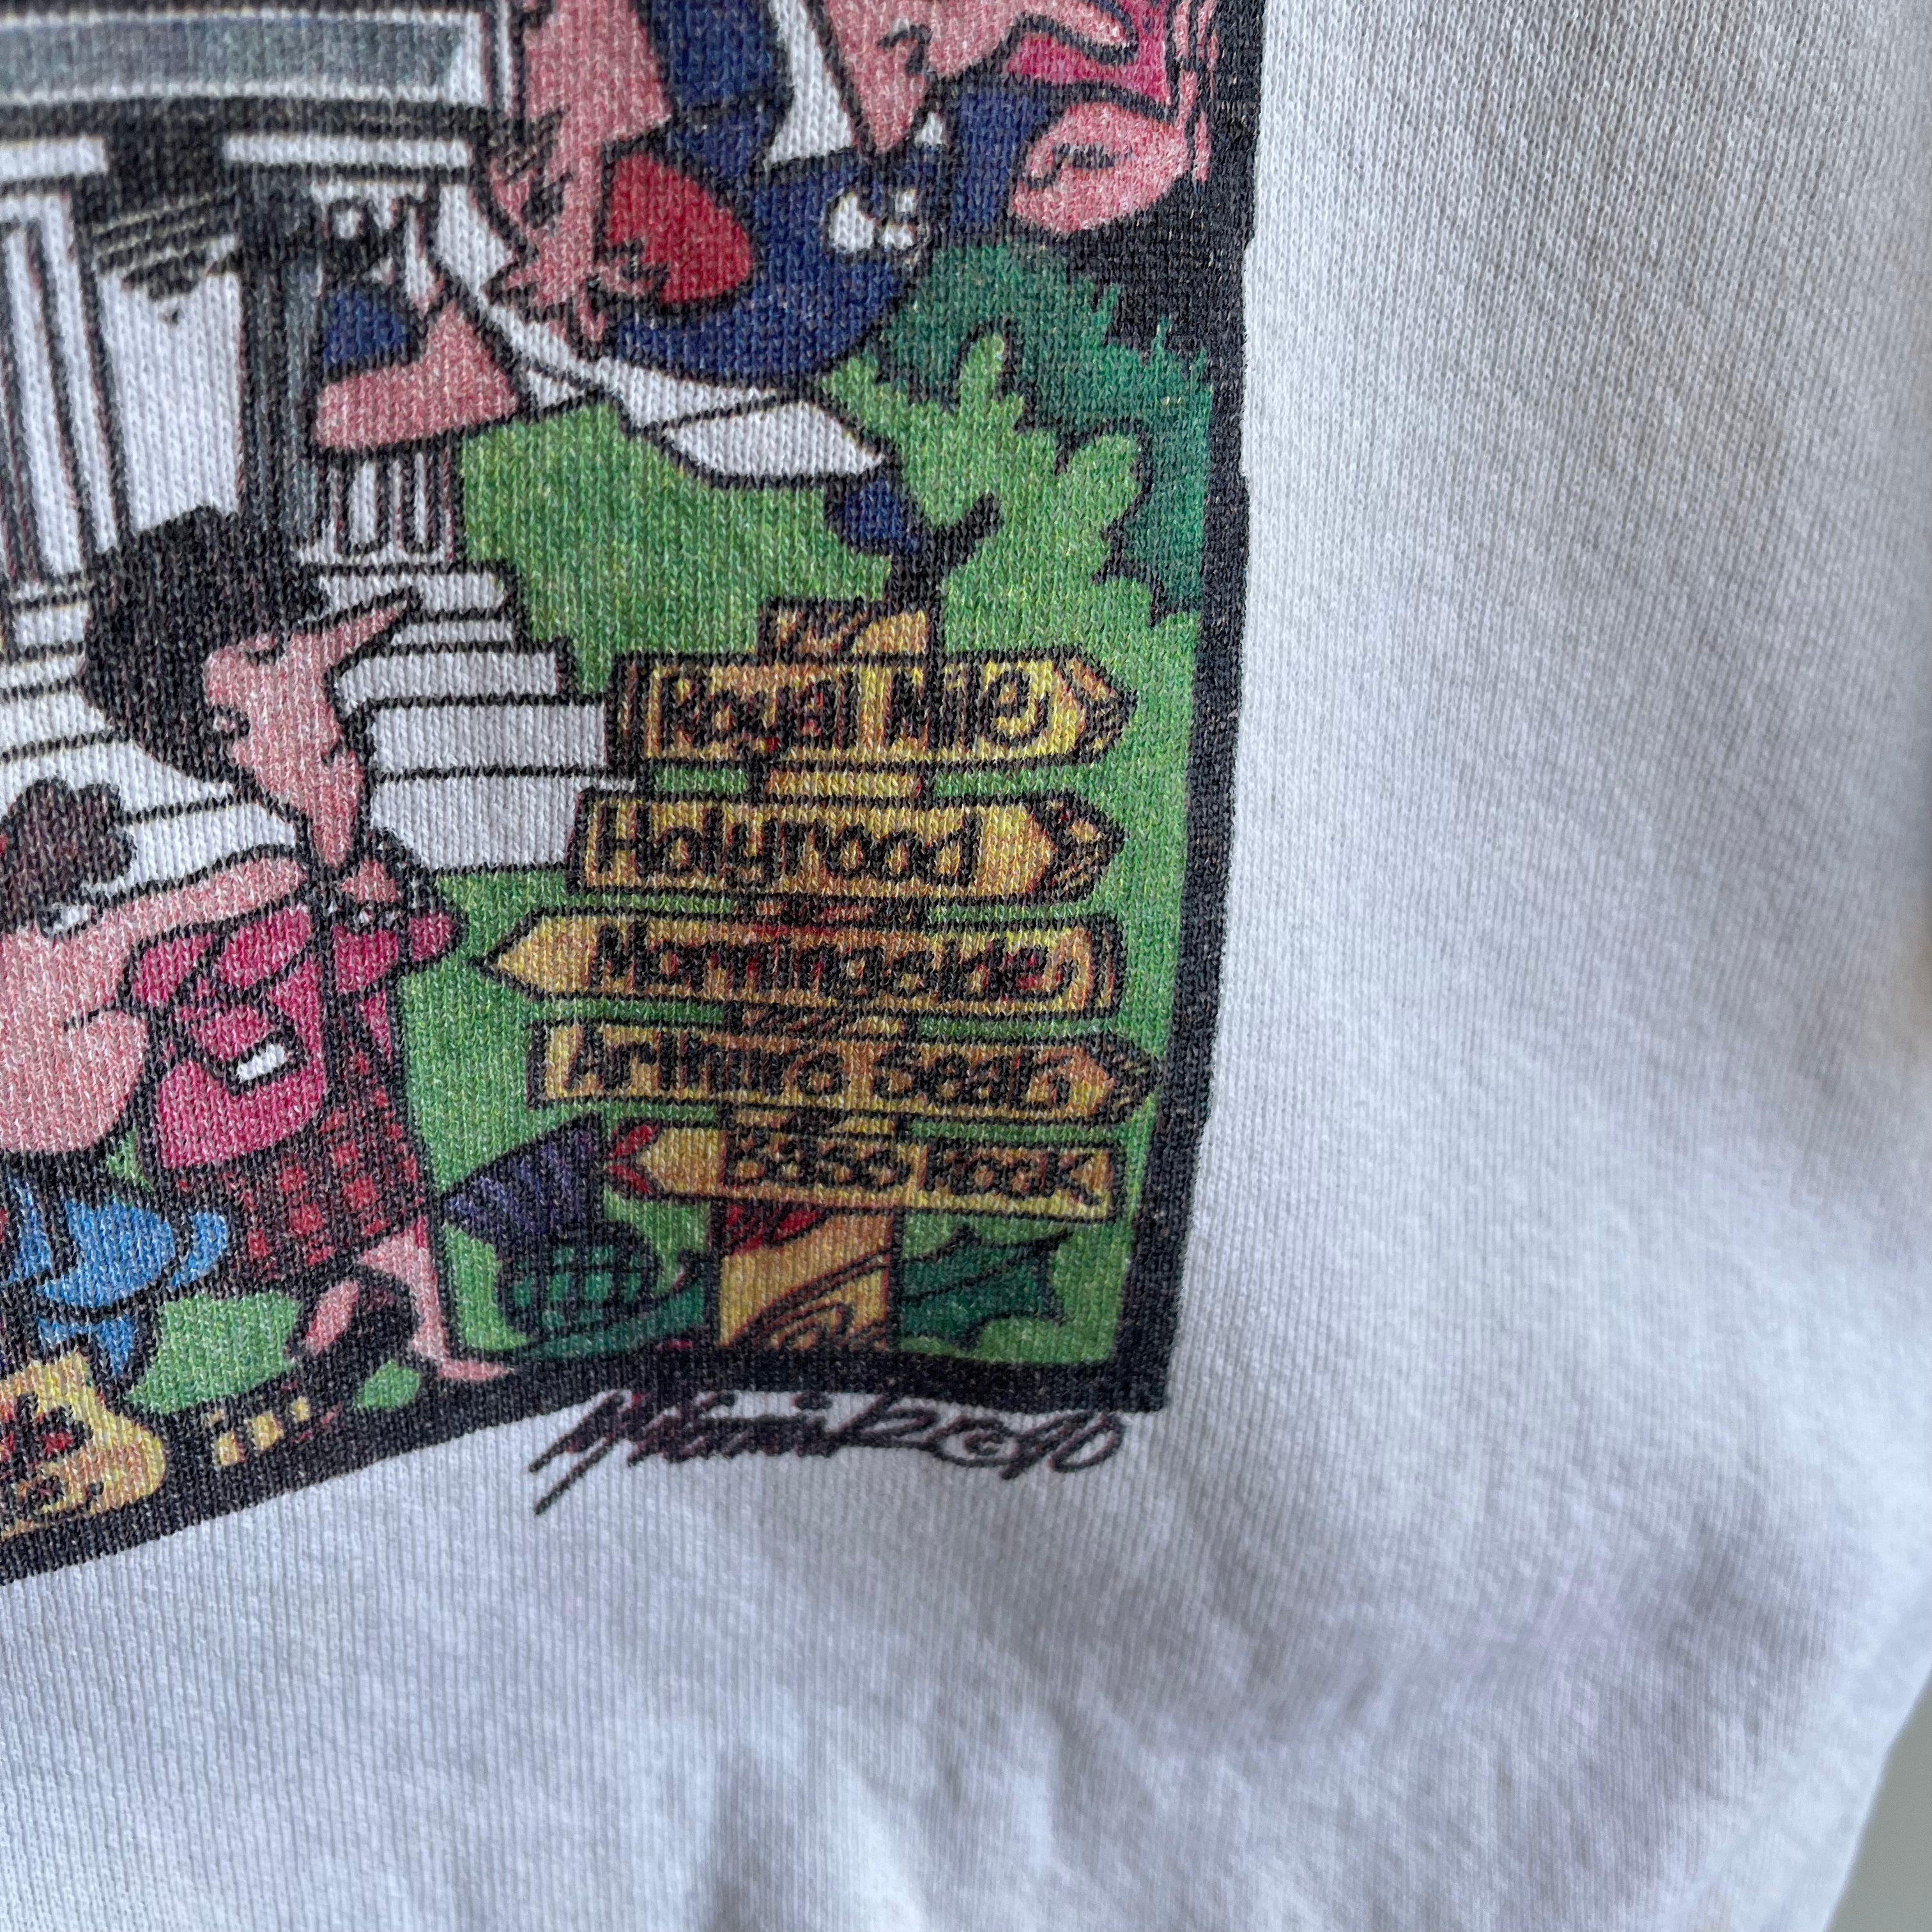 1990 Edinburgh, Scotland Super Rad Tourist Sweatshirt - Made in Ireland by Screen Stars